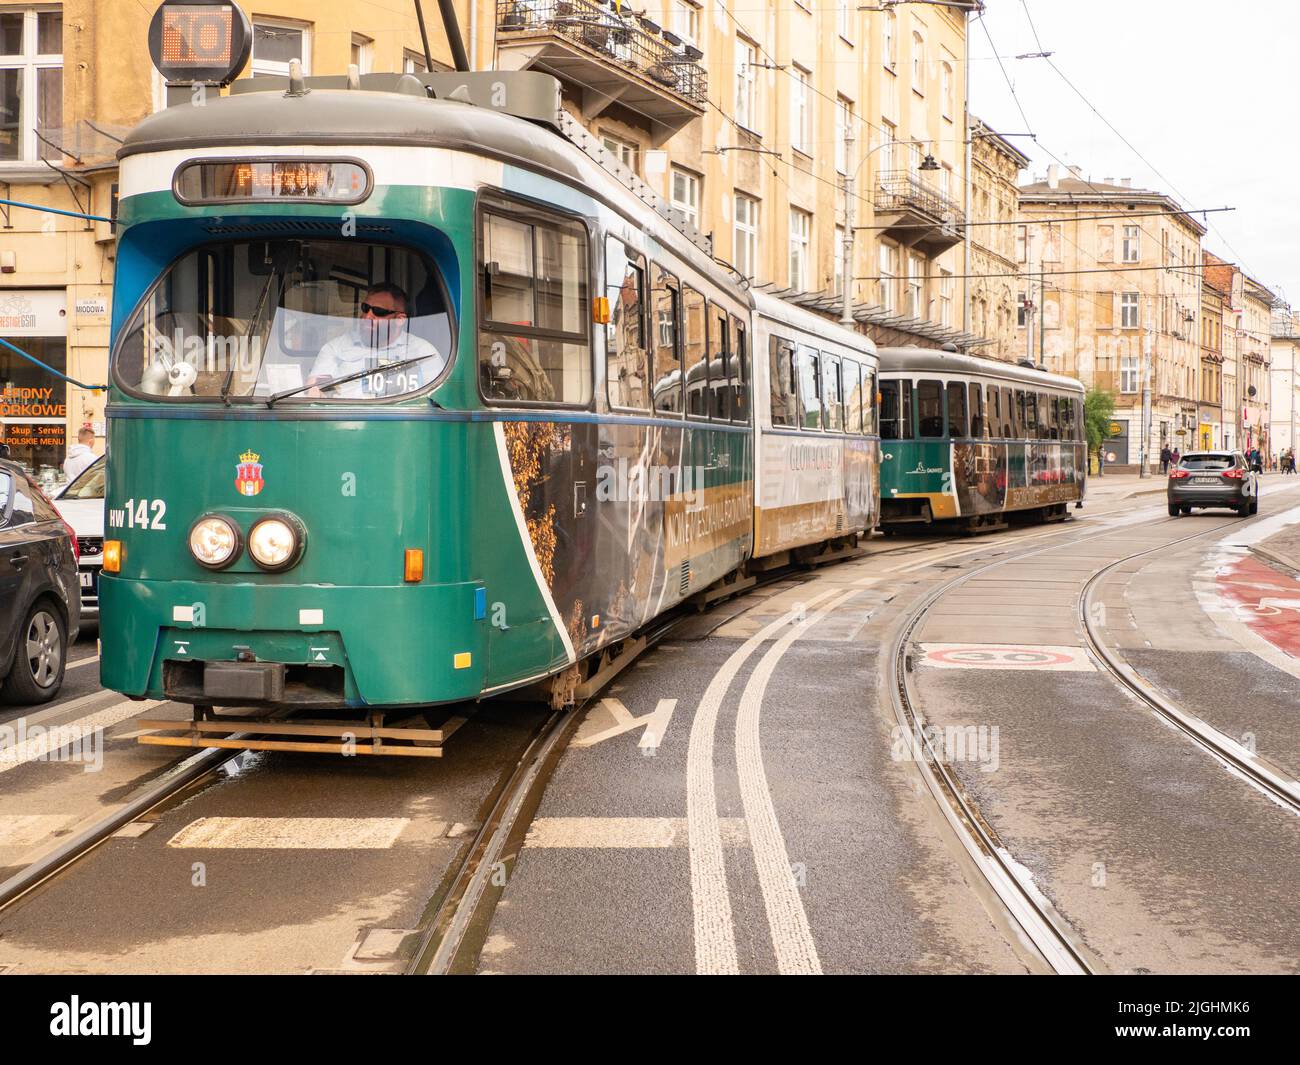 Krakow, Poland - May 2021: Green old tram on the historic street in Krakow, Poland. Europe Stock Photo